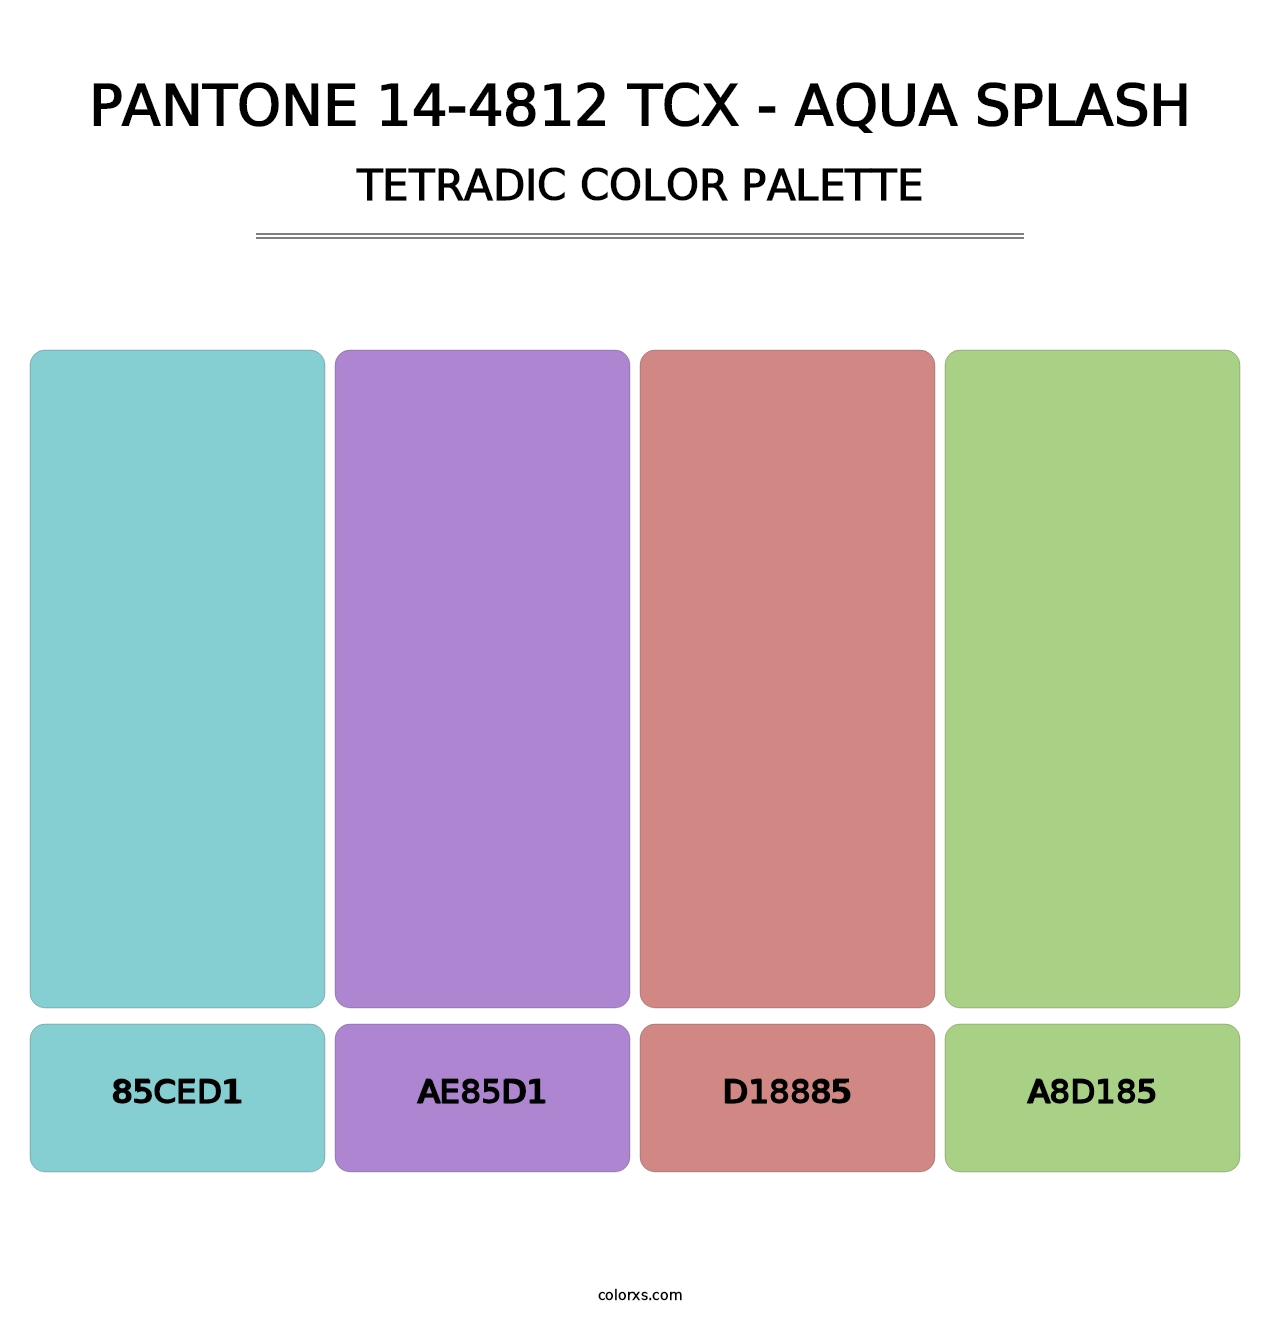 PANTONE 14-4812 TCX - Aqua Splash - Tetradic Color Palette